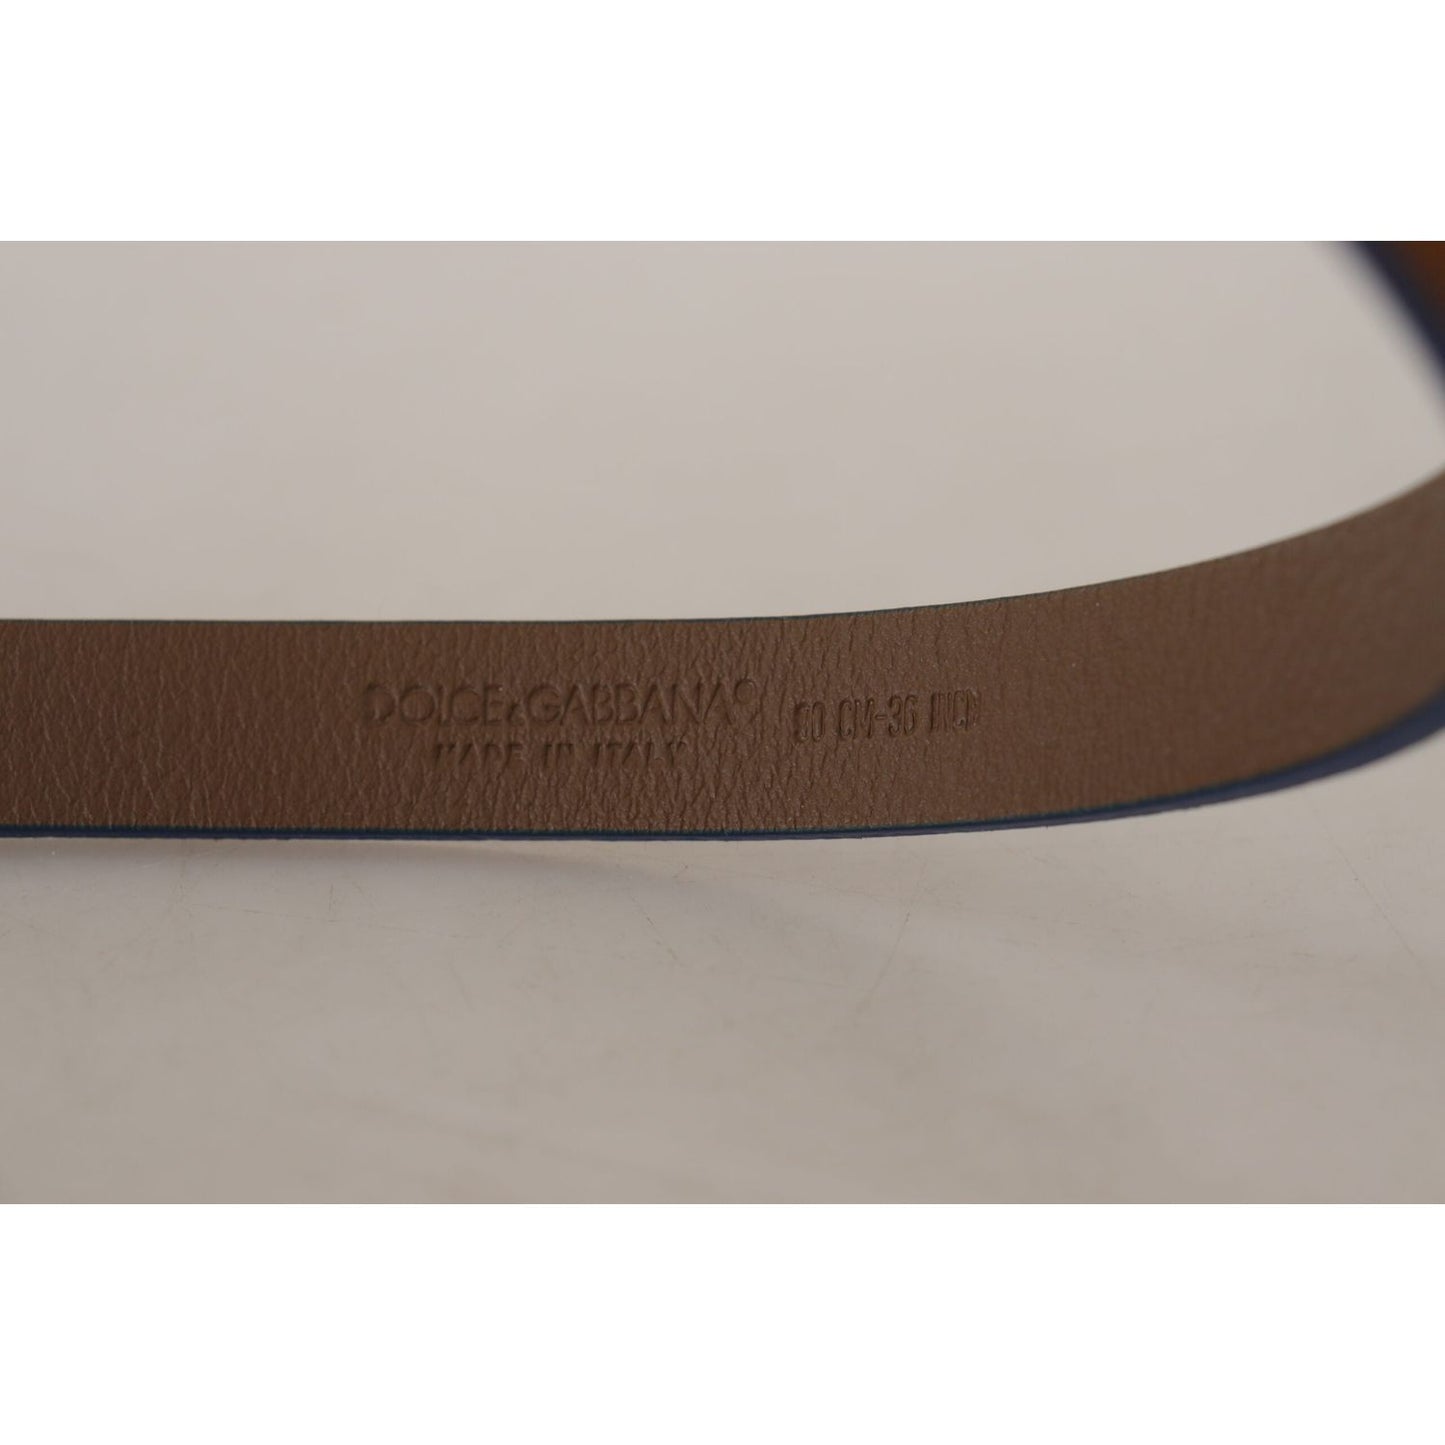 Dolce & Gabbana Elegant Suede Leather Belt with Logo Engraved Buckle dark-brown-blue-leather-gold-metal-buckle-belt IMG_8963-scaled-4f56355f-7a0.jpg